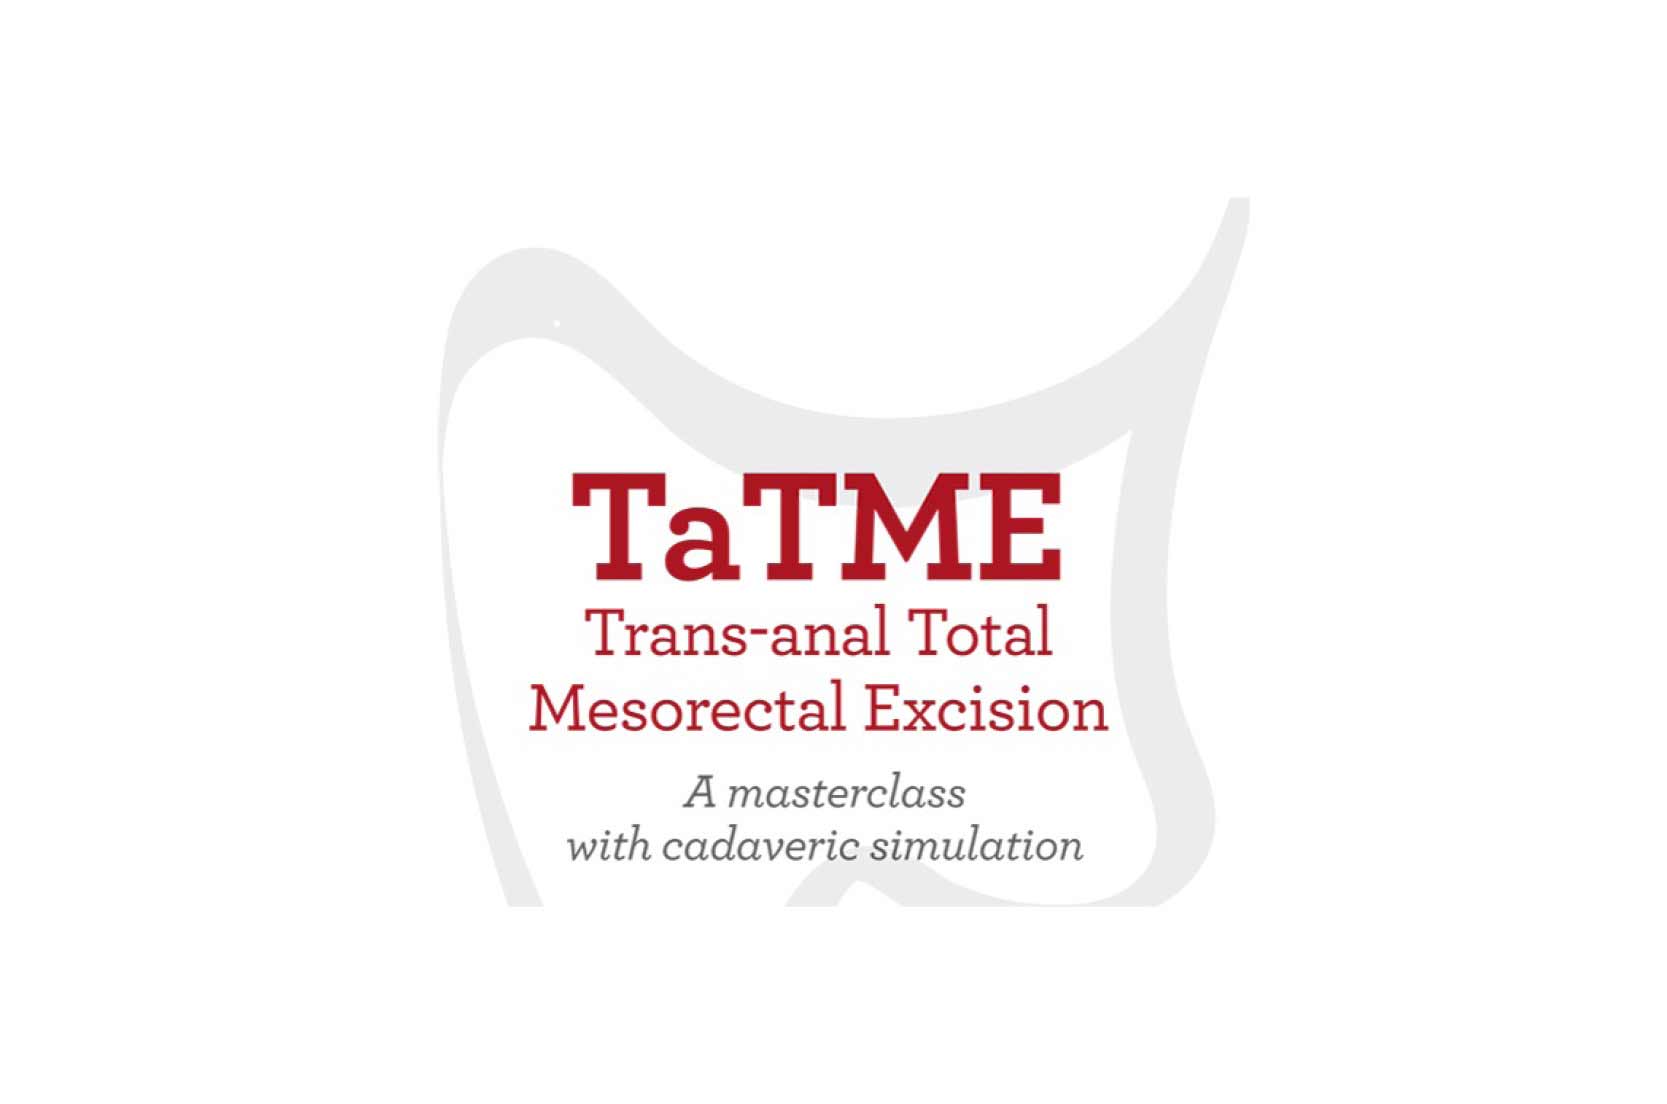 Trans-anal Total Mesorectal Excision 2019